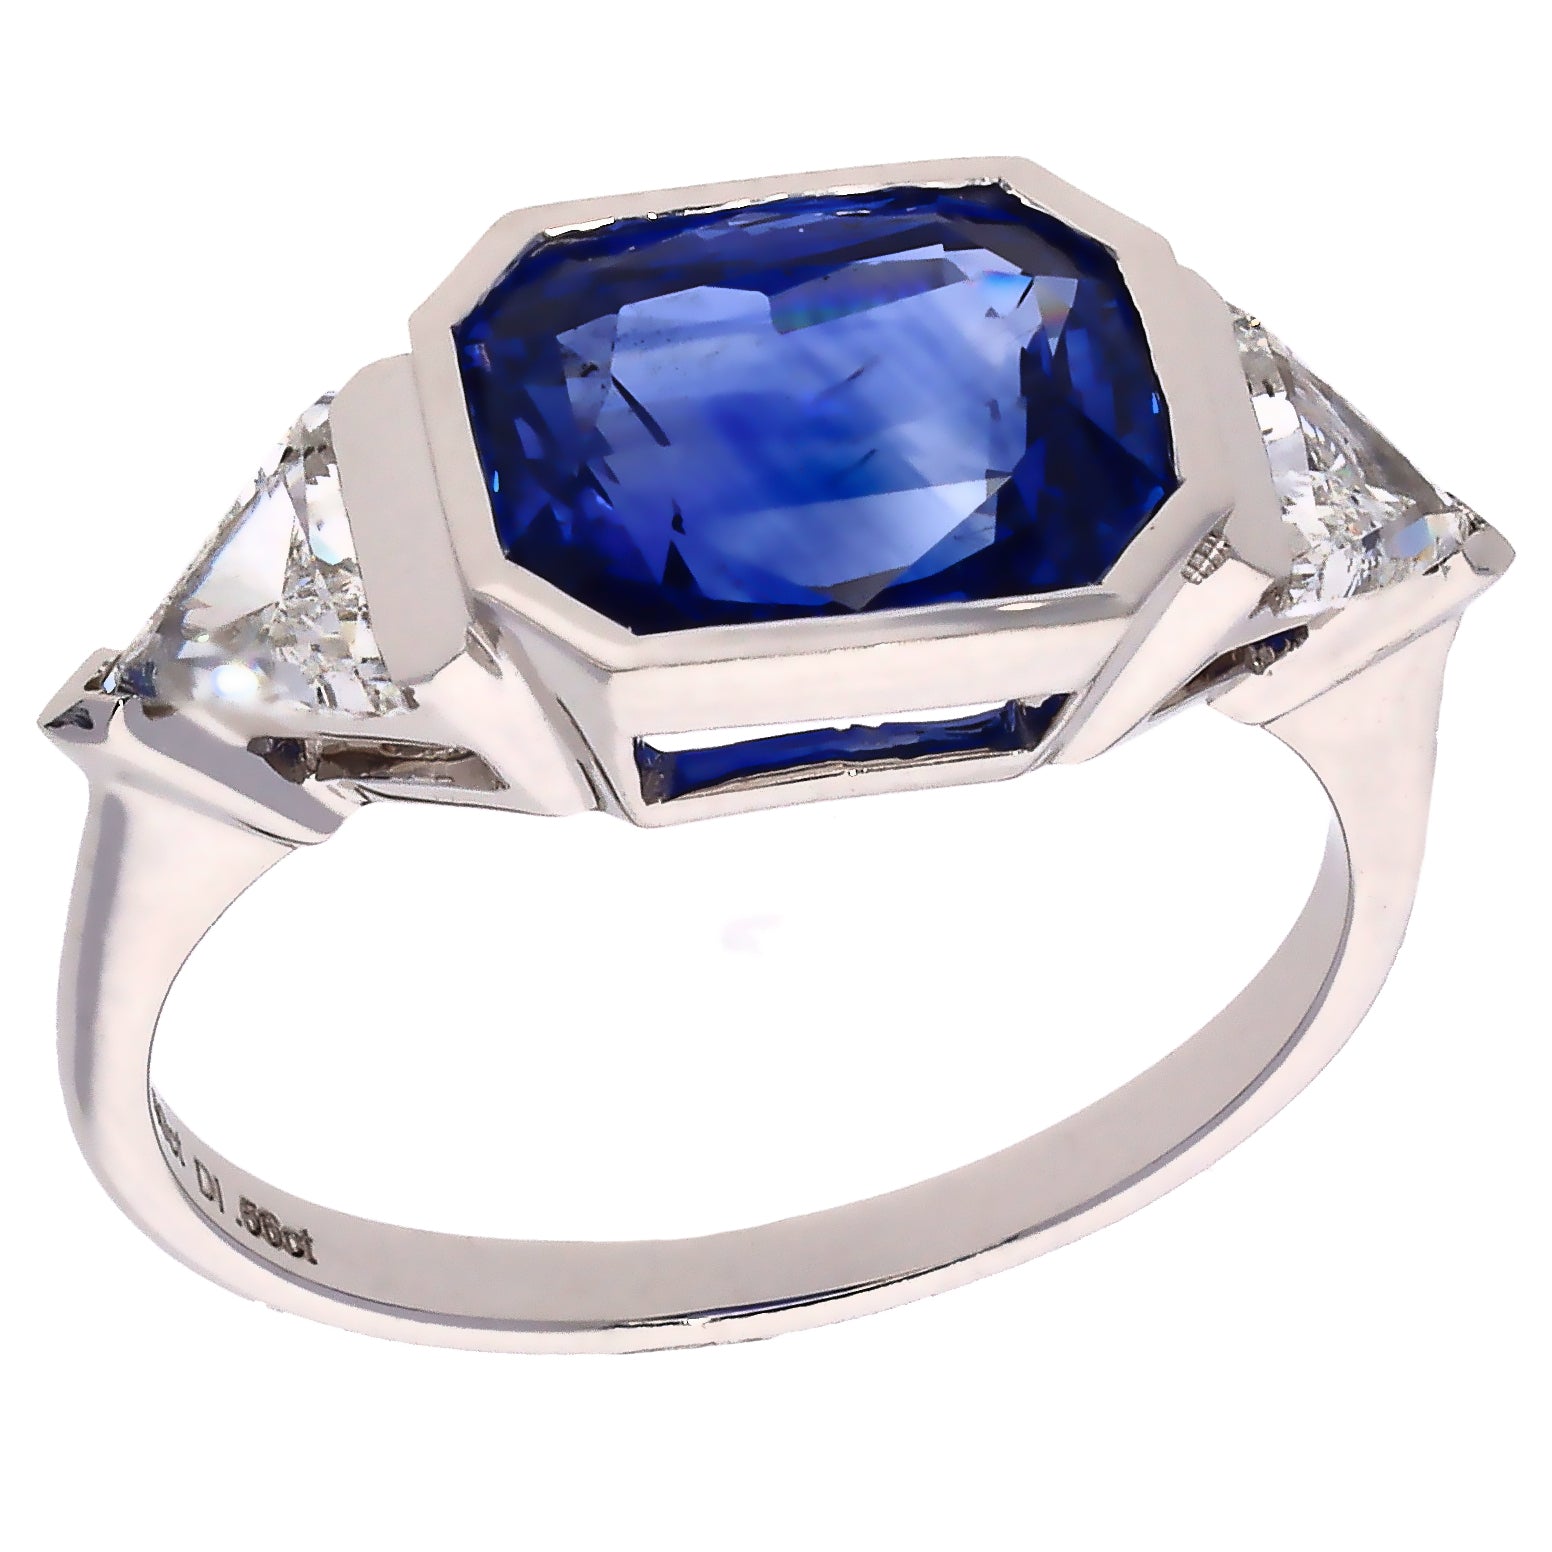 14K White Gold Octagonal Sri Lanka Sapphire and Trillion Cut Diamond Ring